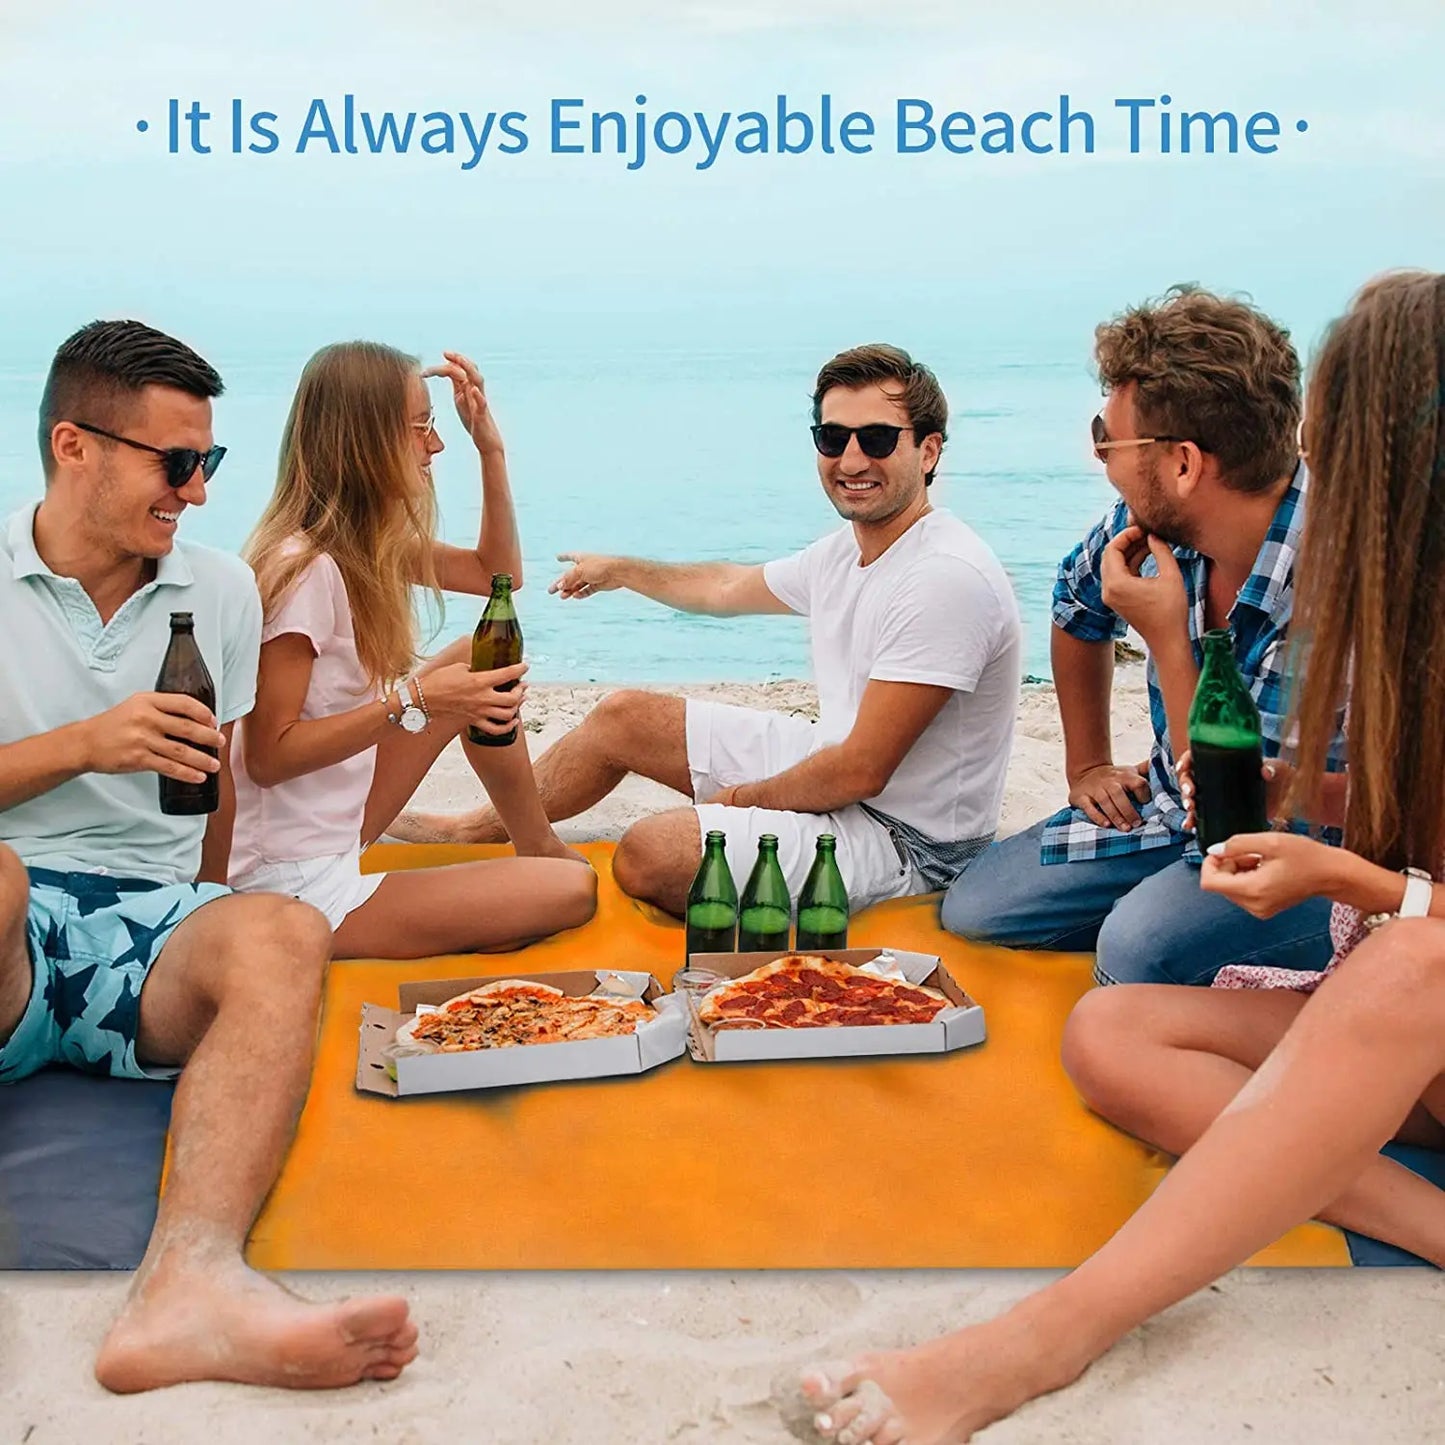 200 × 210 manta de bolsillo a prueba de agua Meta de campamento plegable colchón portátil portátil liviano estatera de picnic de arena playa